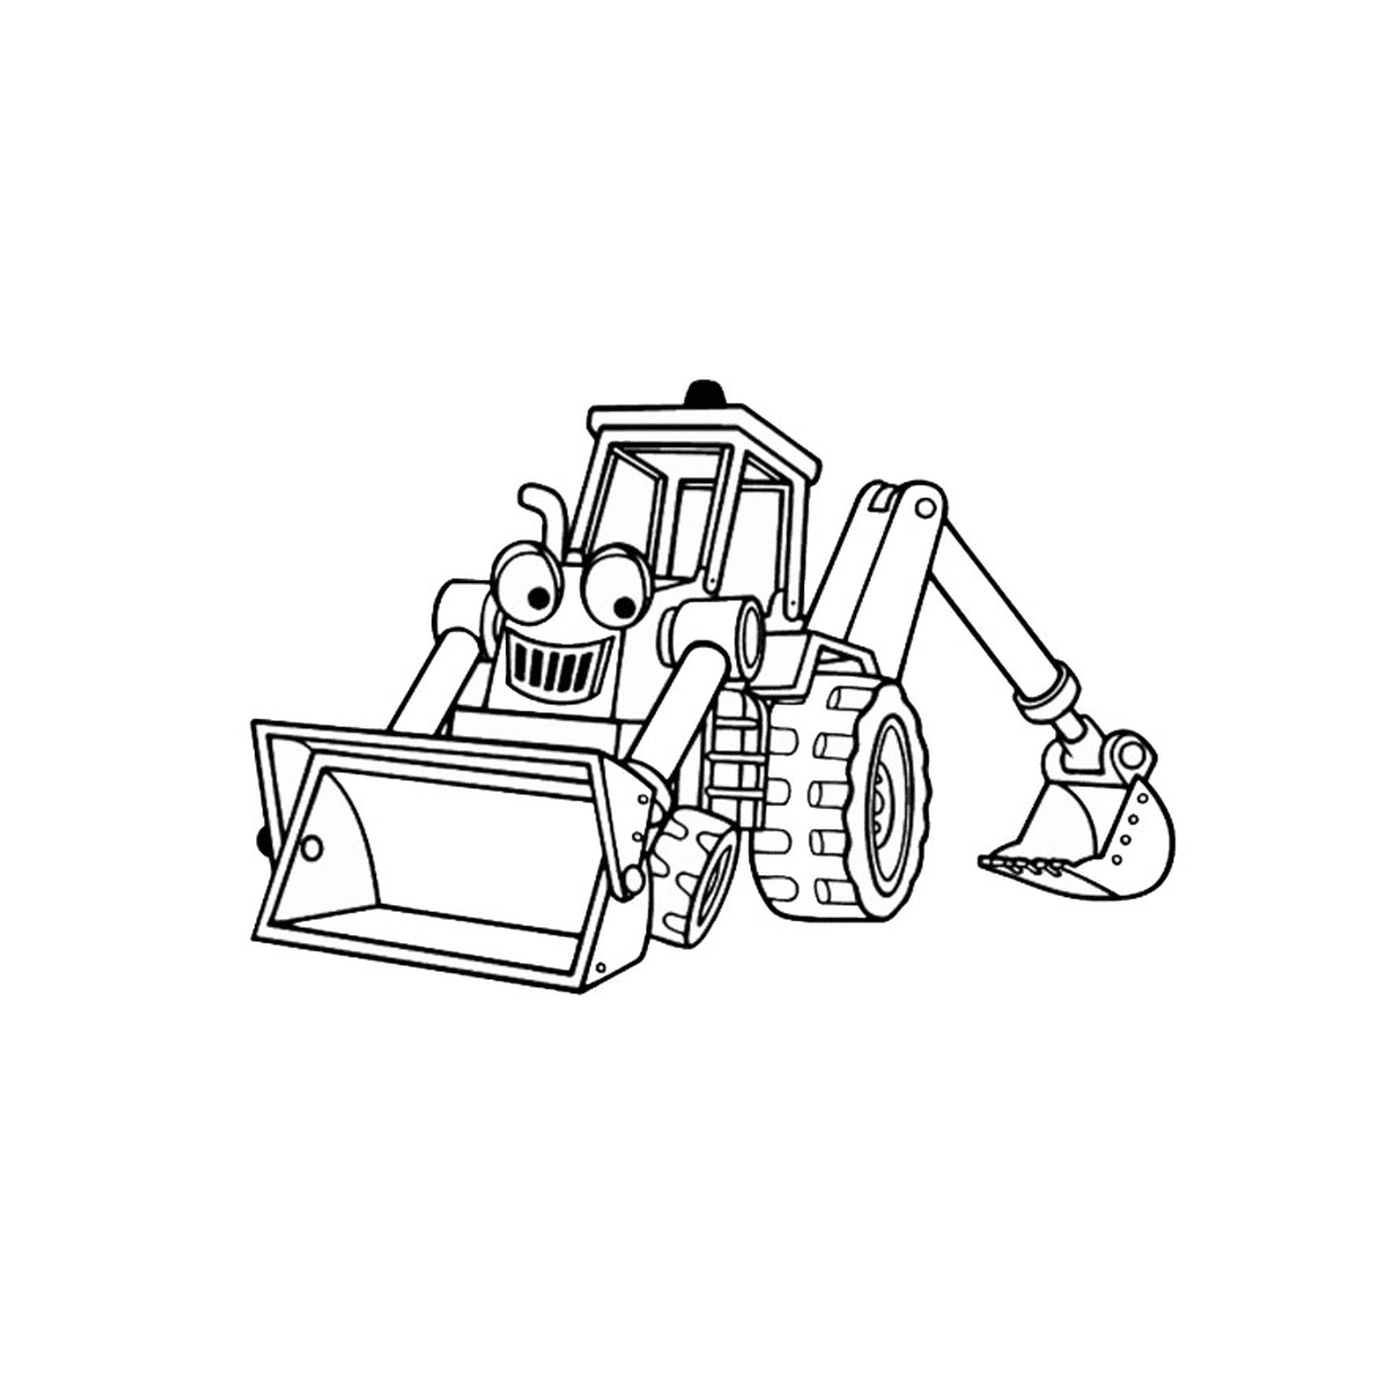   Tracteur dessin animé drôle 